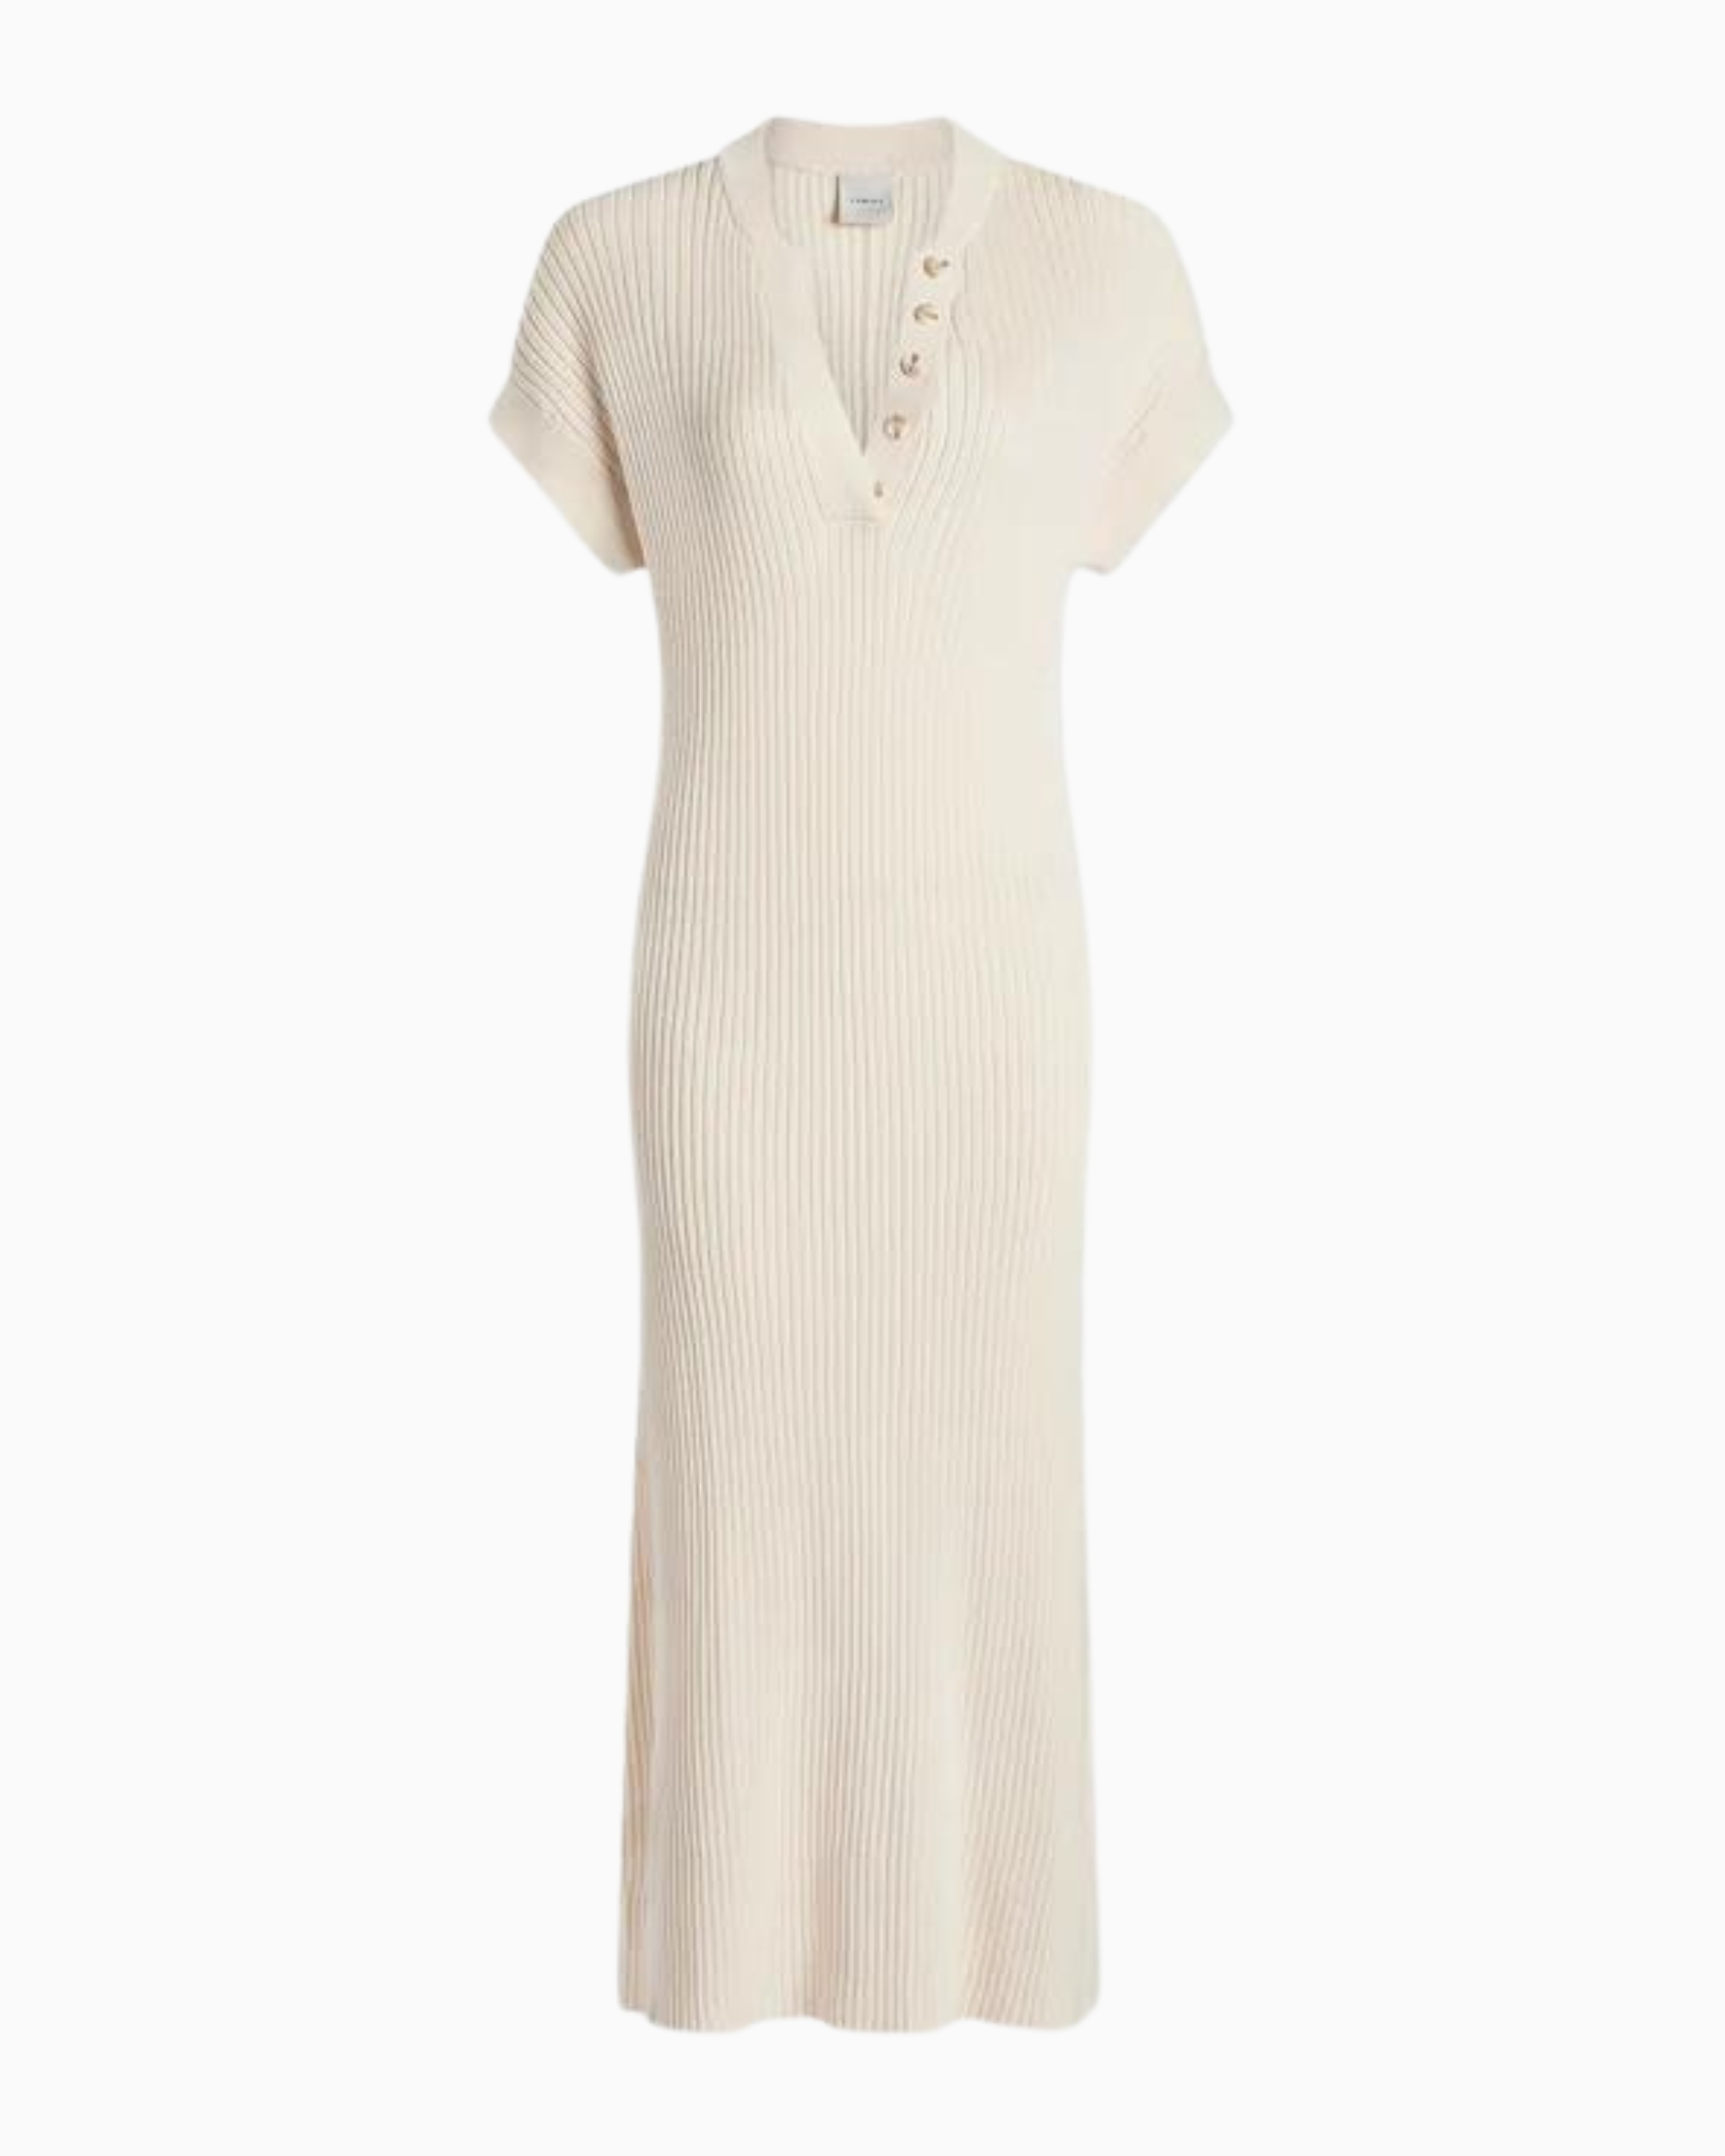 Varley Aria Knit Midi Dress in Whitecap Grey